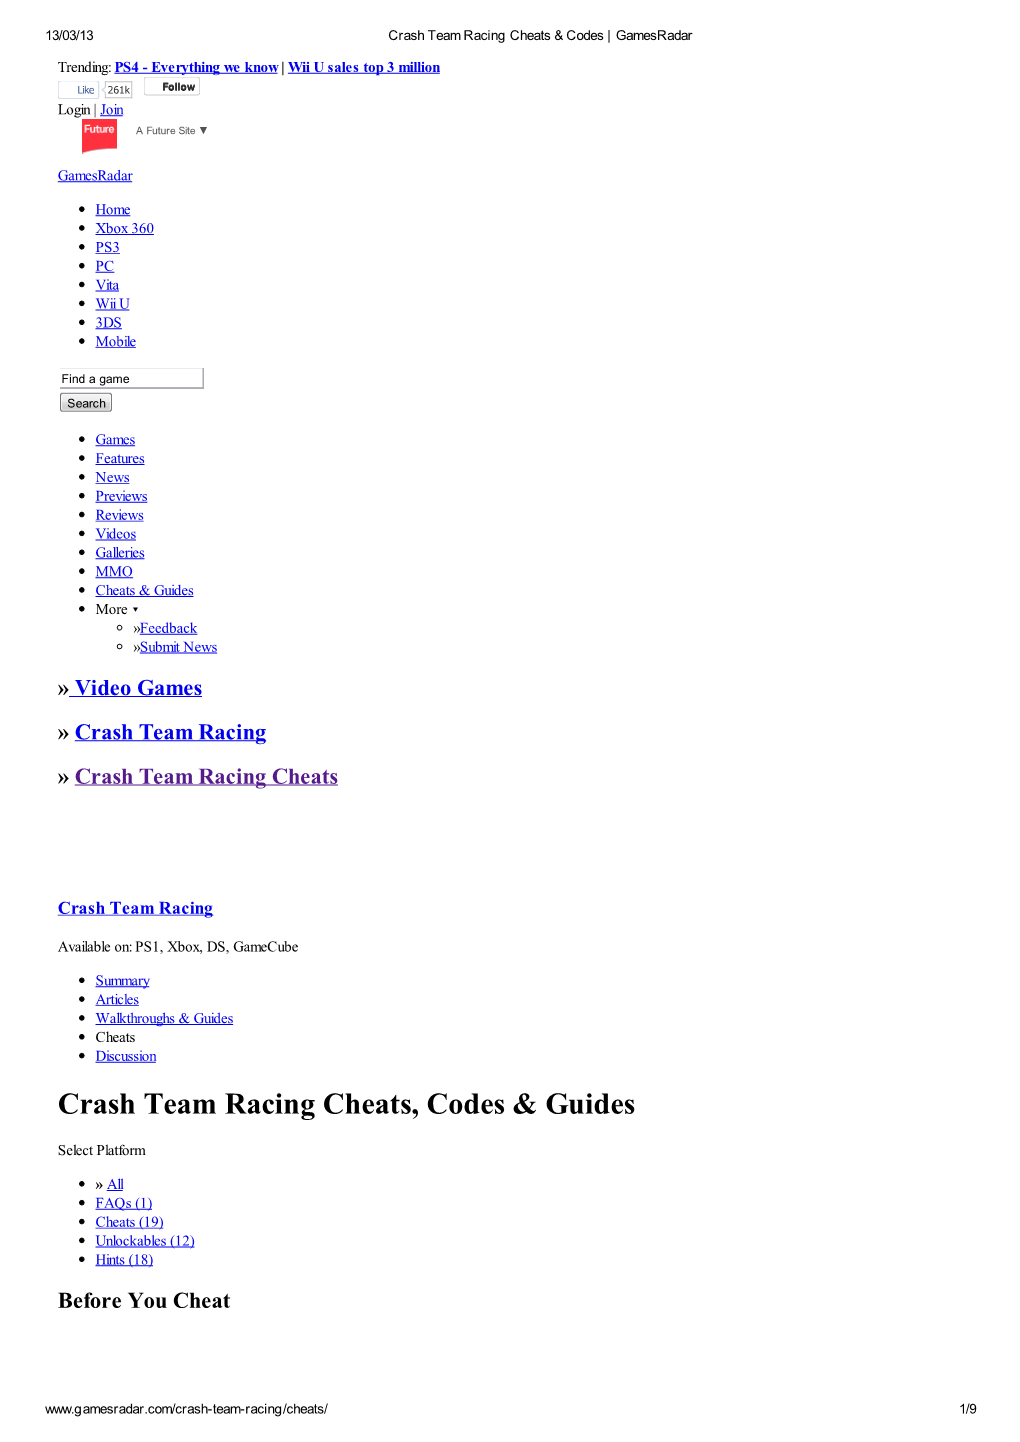 Crash Team Racing Cheats, Codes & Guides